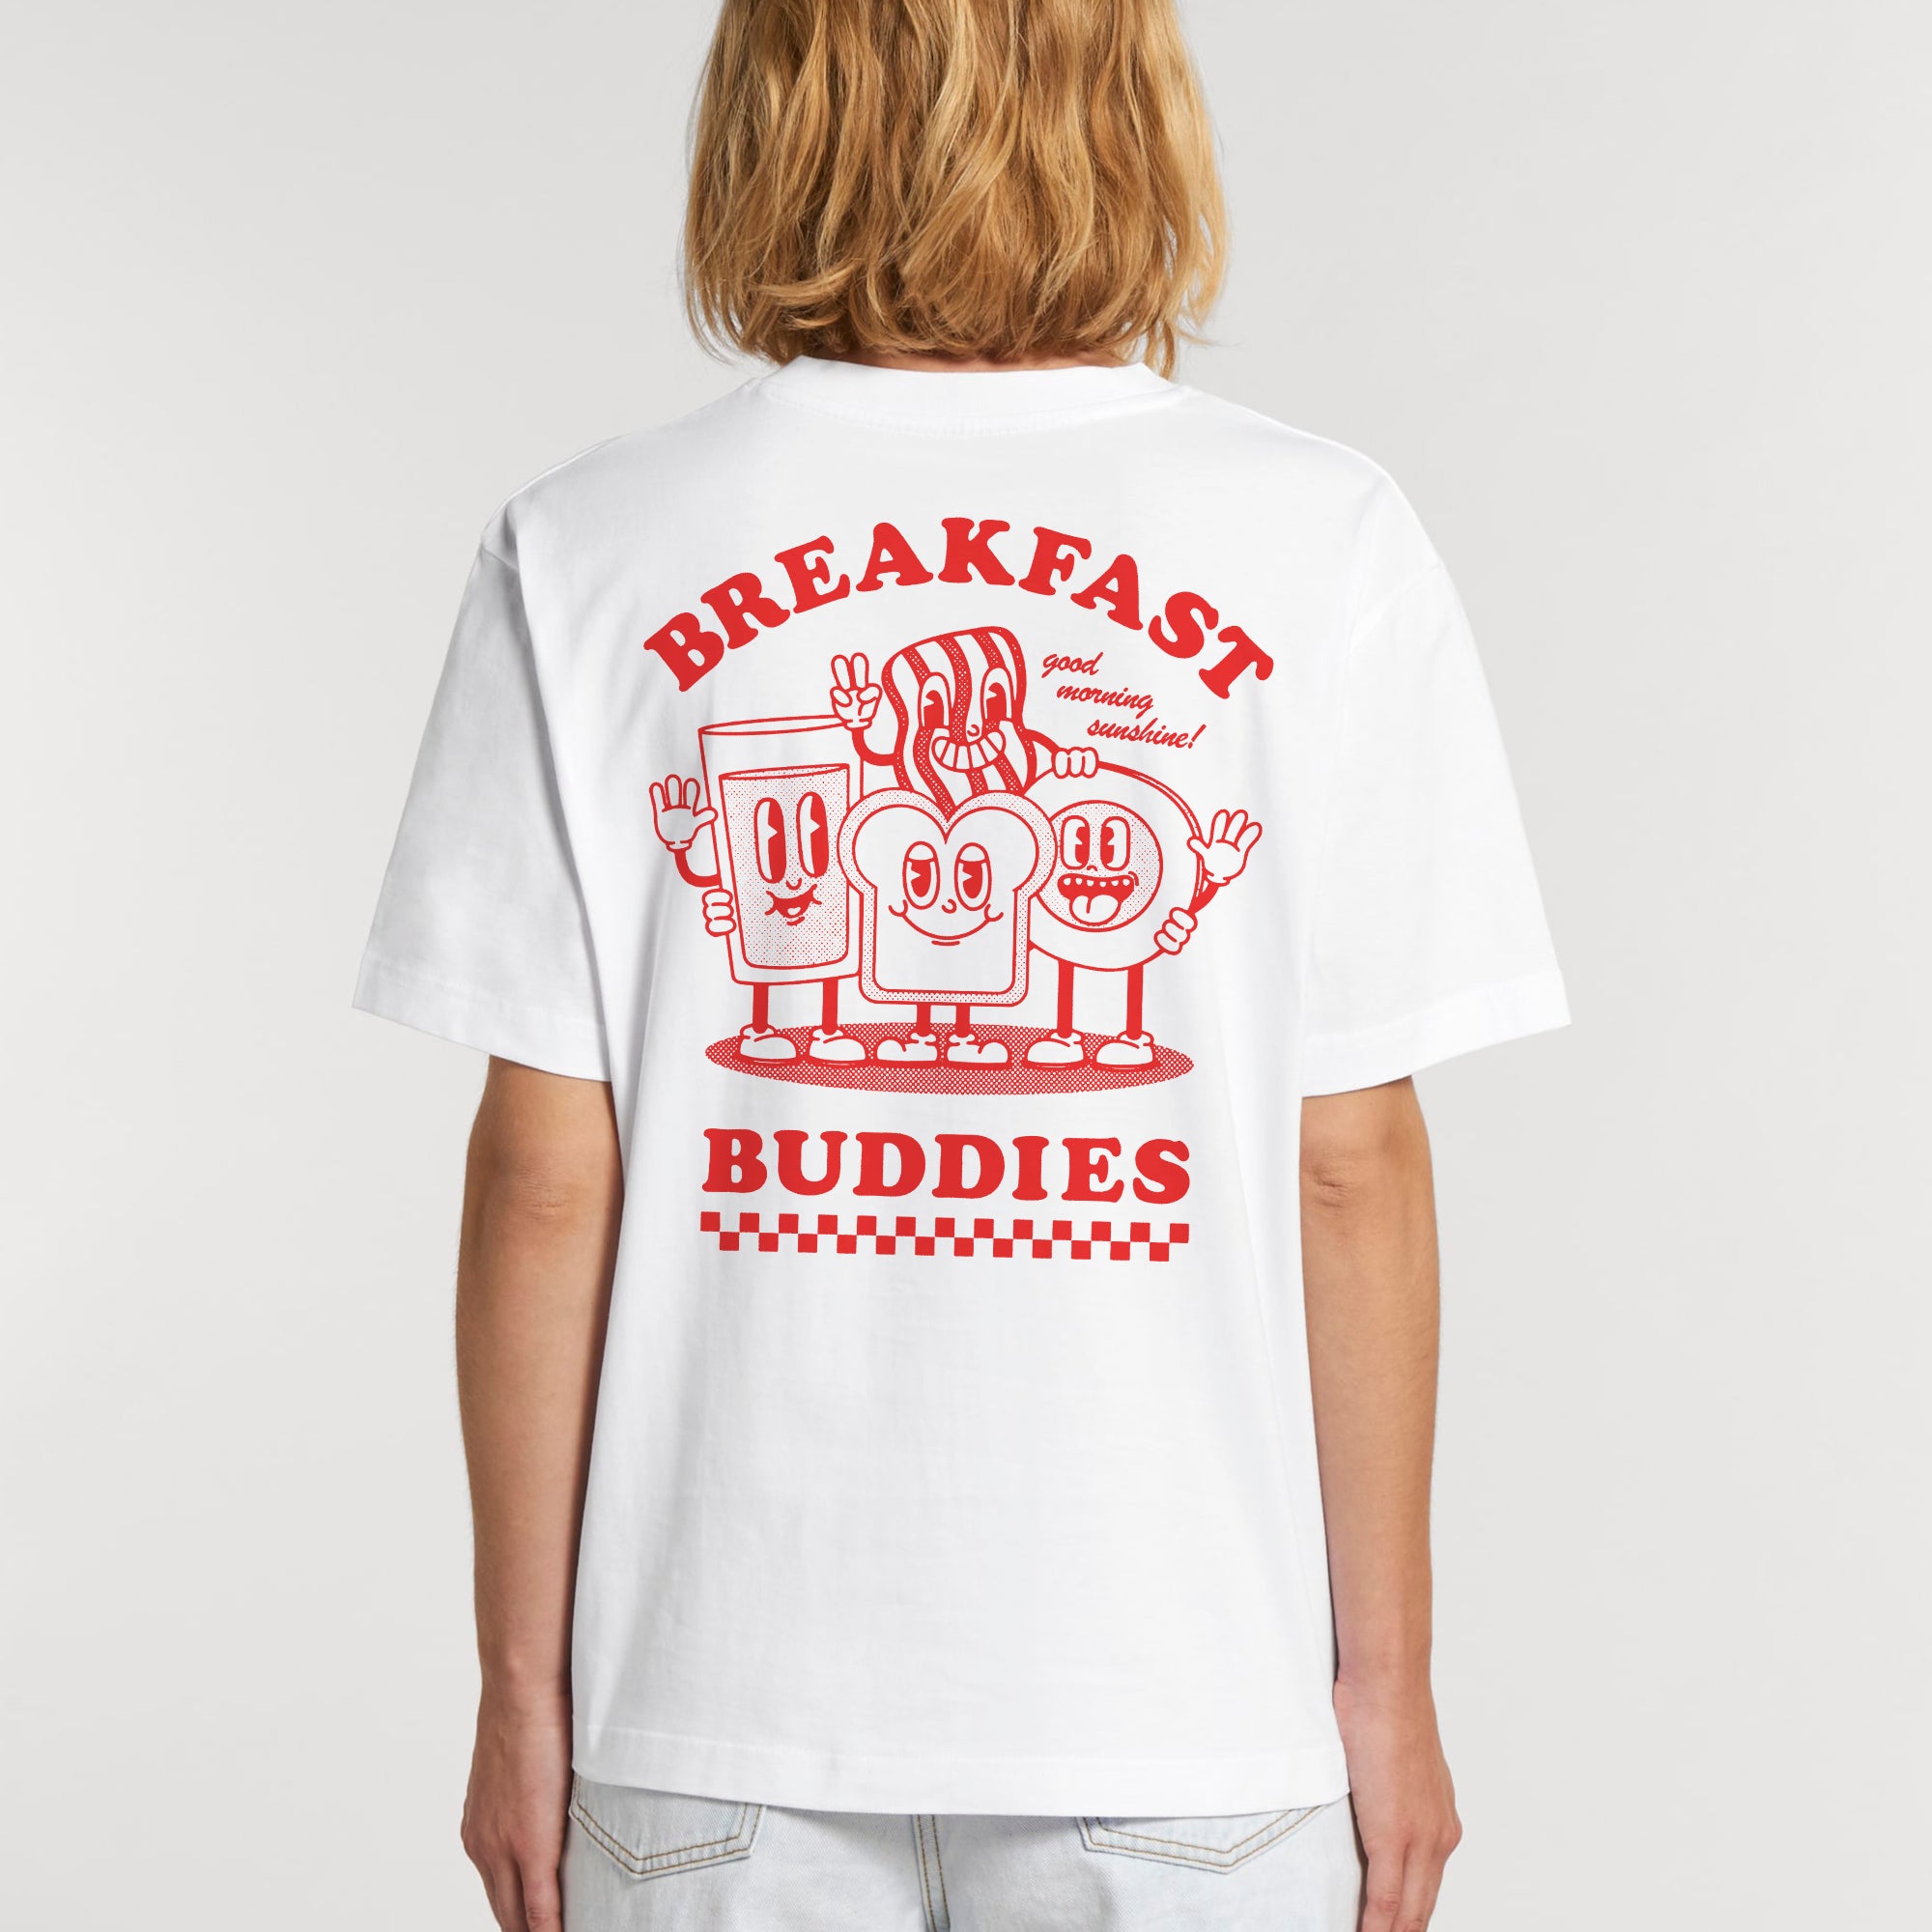 'Breakfast Buddies' Short Sleeve Organic Cotton T-shirt